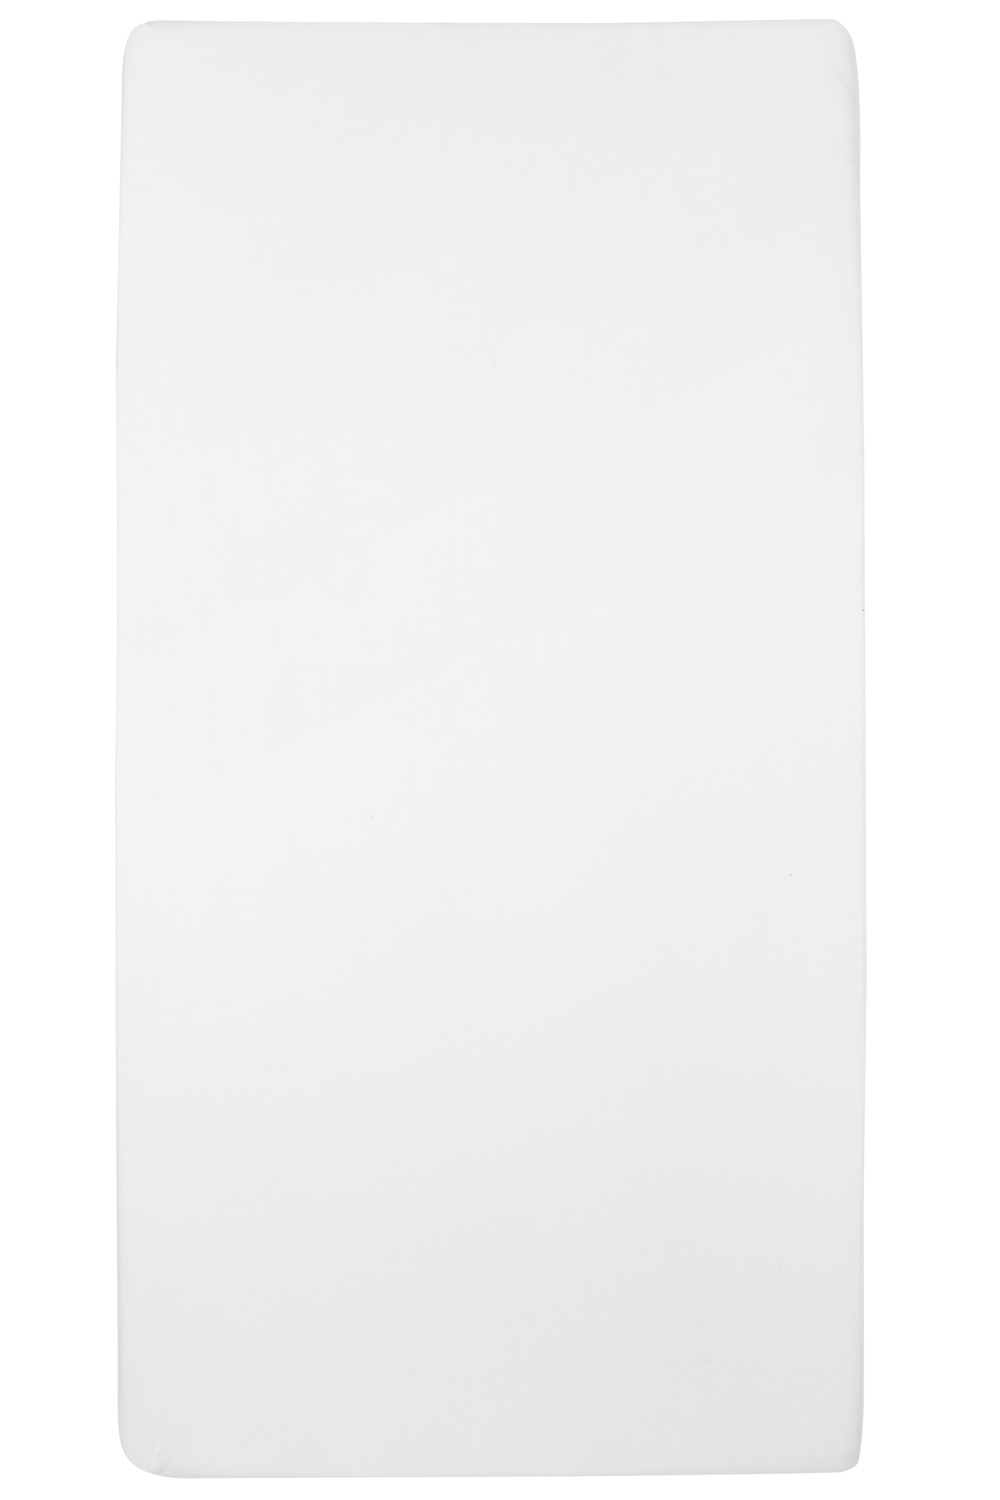 Hoeslaken tweepersoons Uni - white - 140x200cm